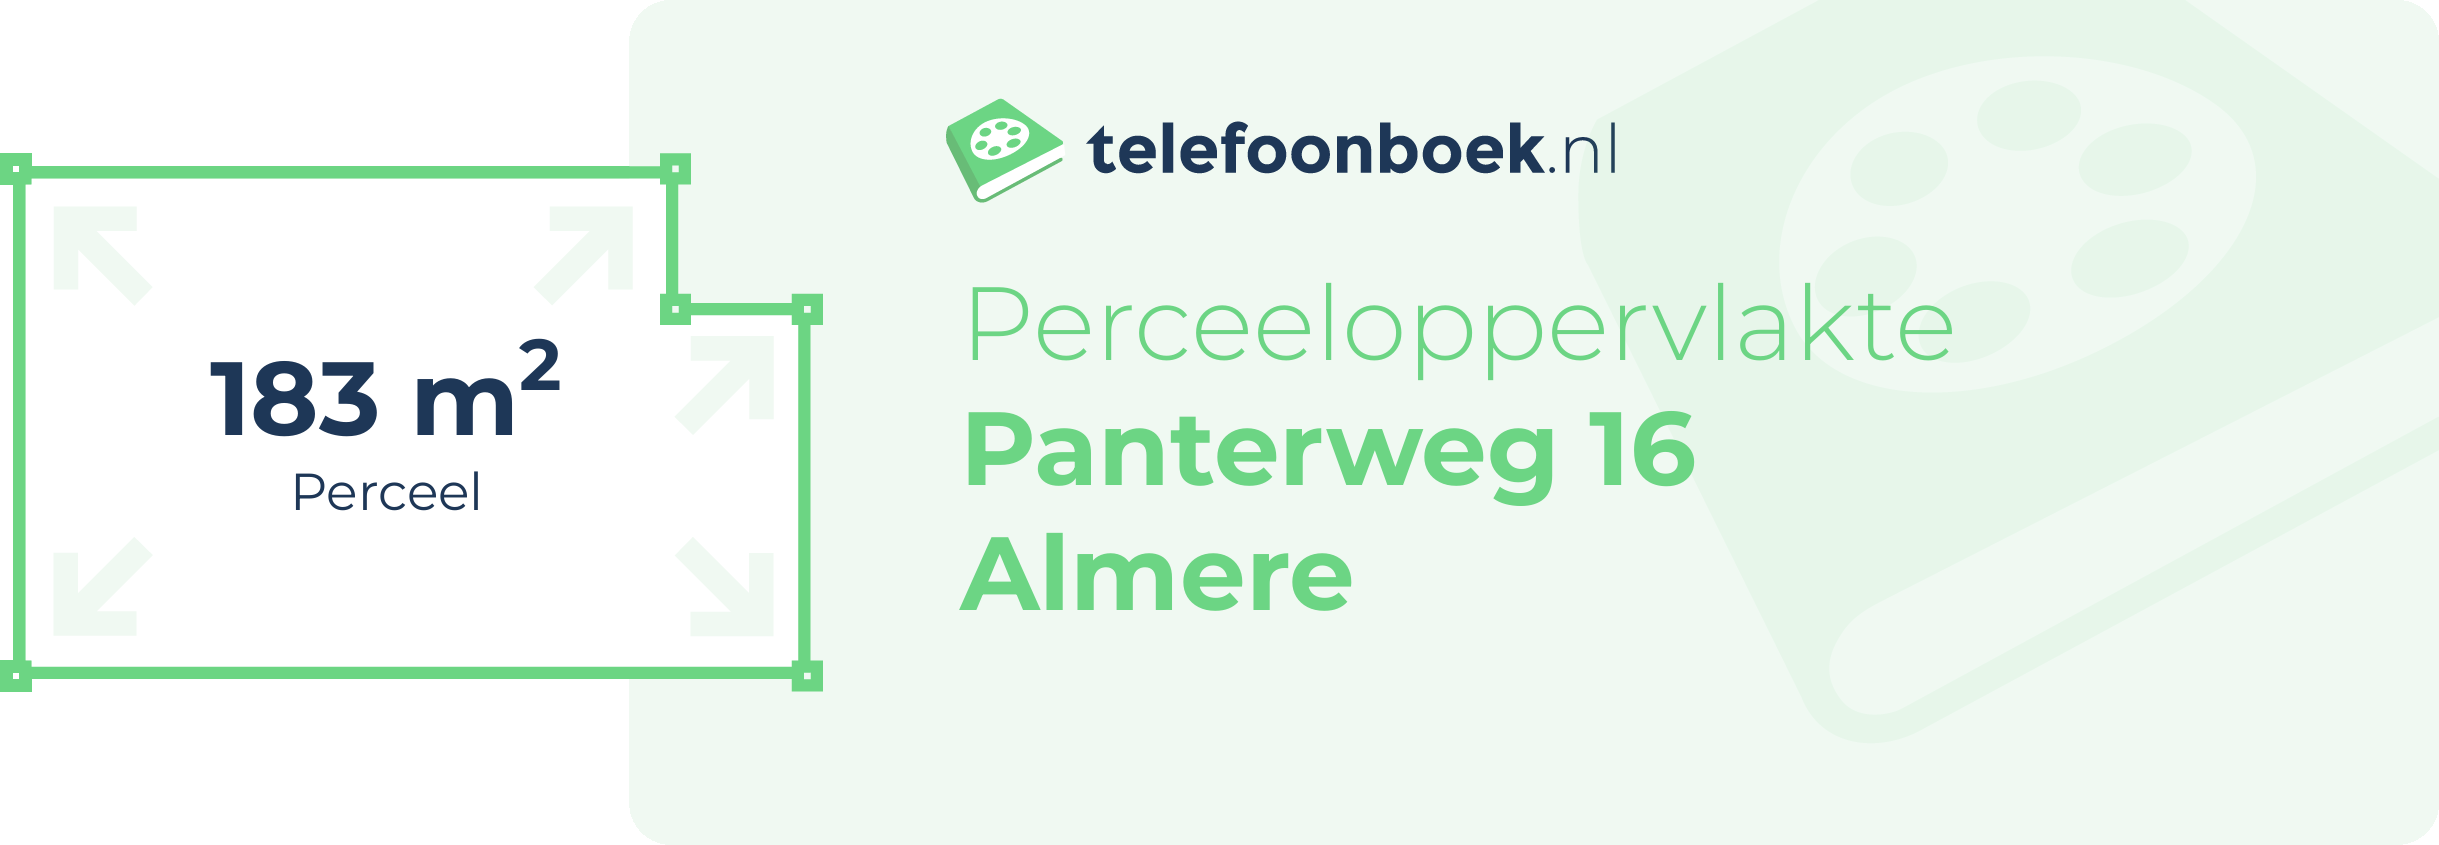 Perceeloppervlakte Panterweg 16 Almere